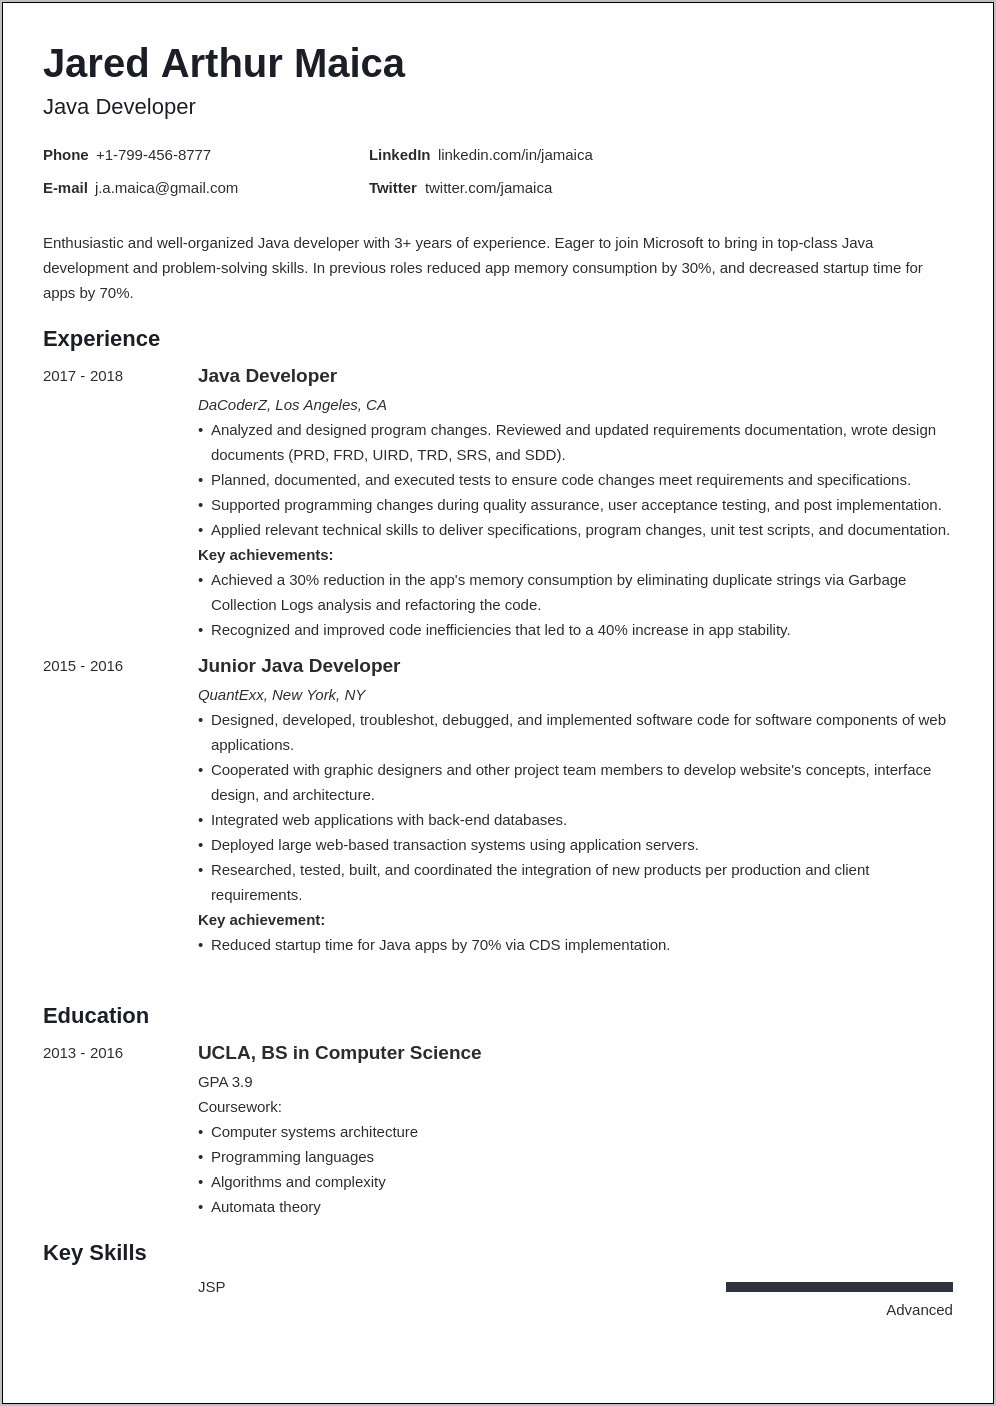 Resume Objective Statement Entry Level Programmer